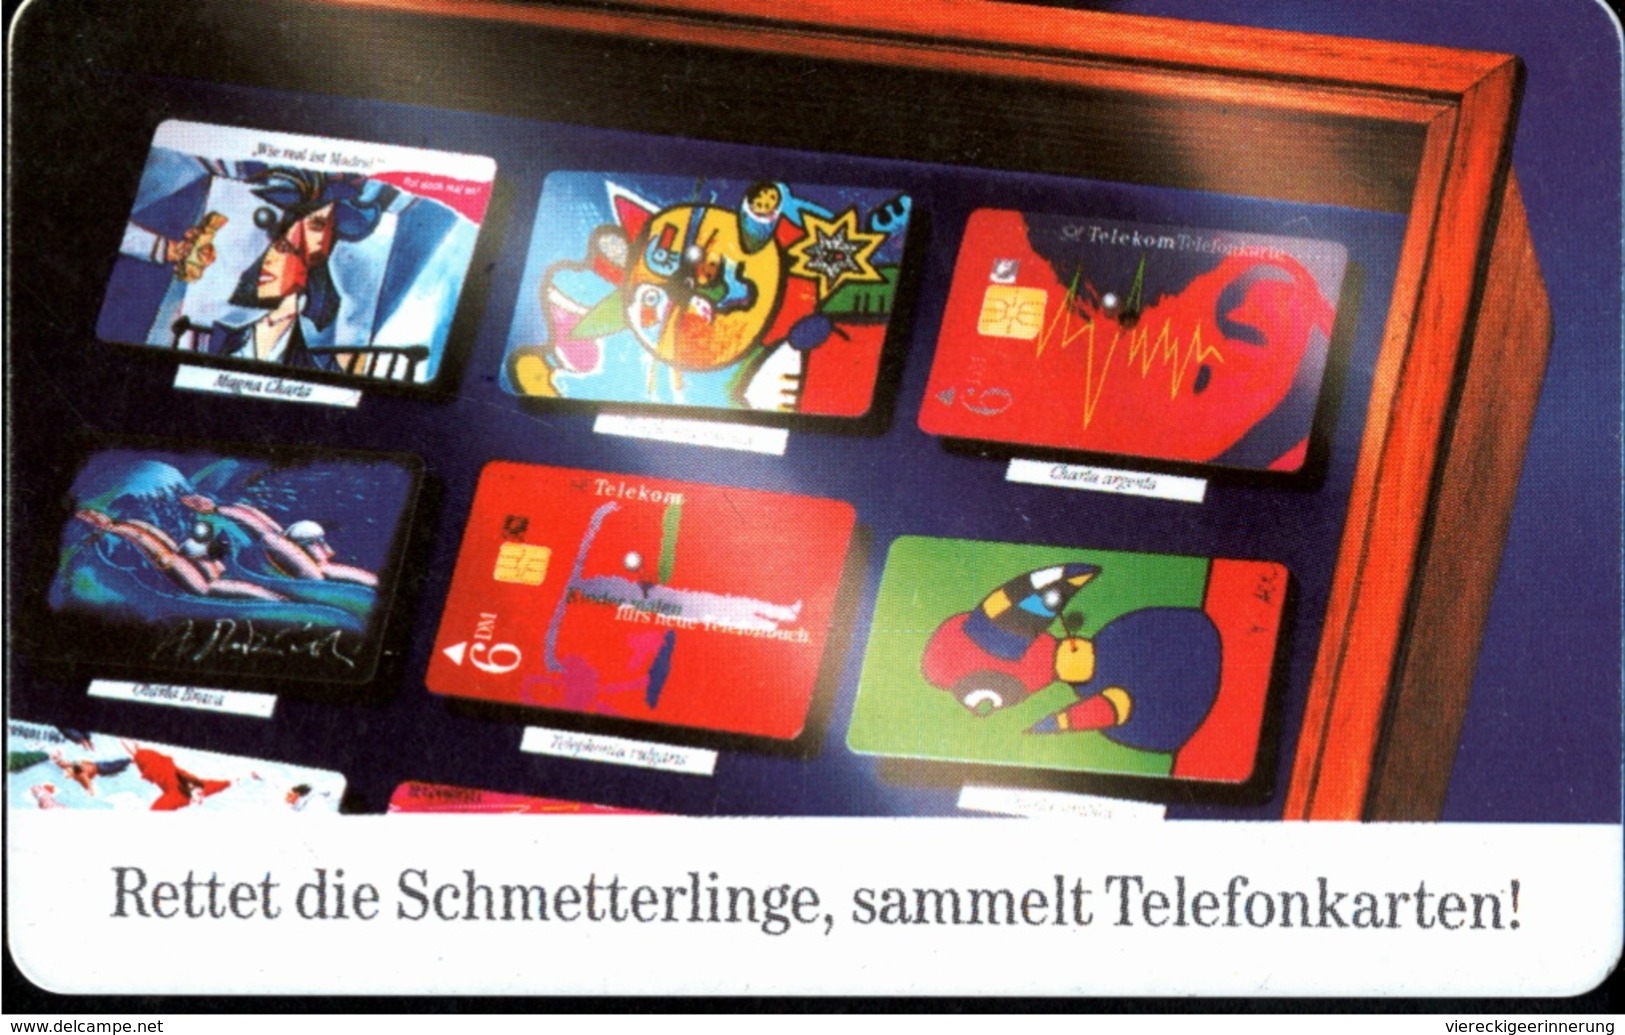 ! Telefonkarte, Telecarte, Phonecard, 1996, S PD, Sammelt Telefonkarten, Schmetterlinge, Germany - P & PD-Series : Guichet - D. Telekom